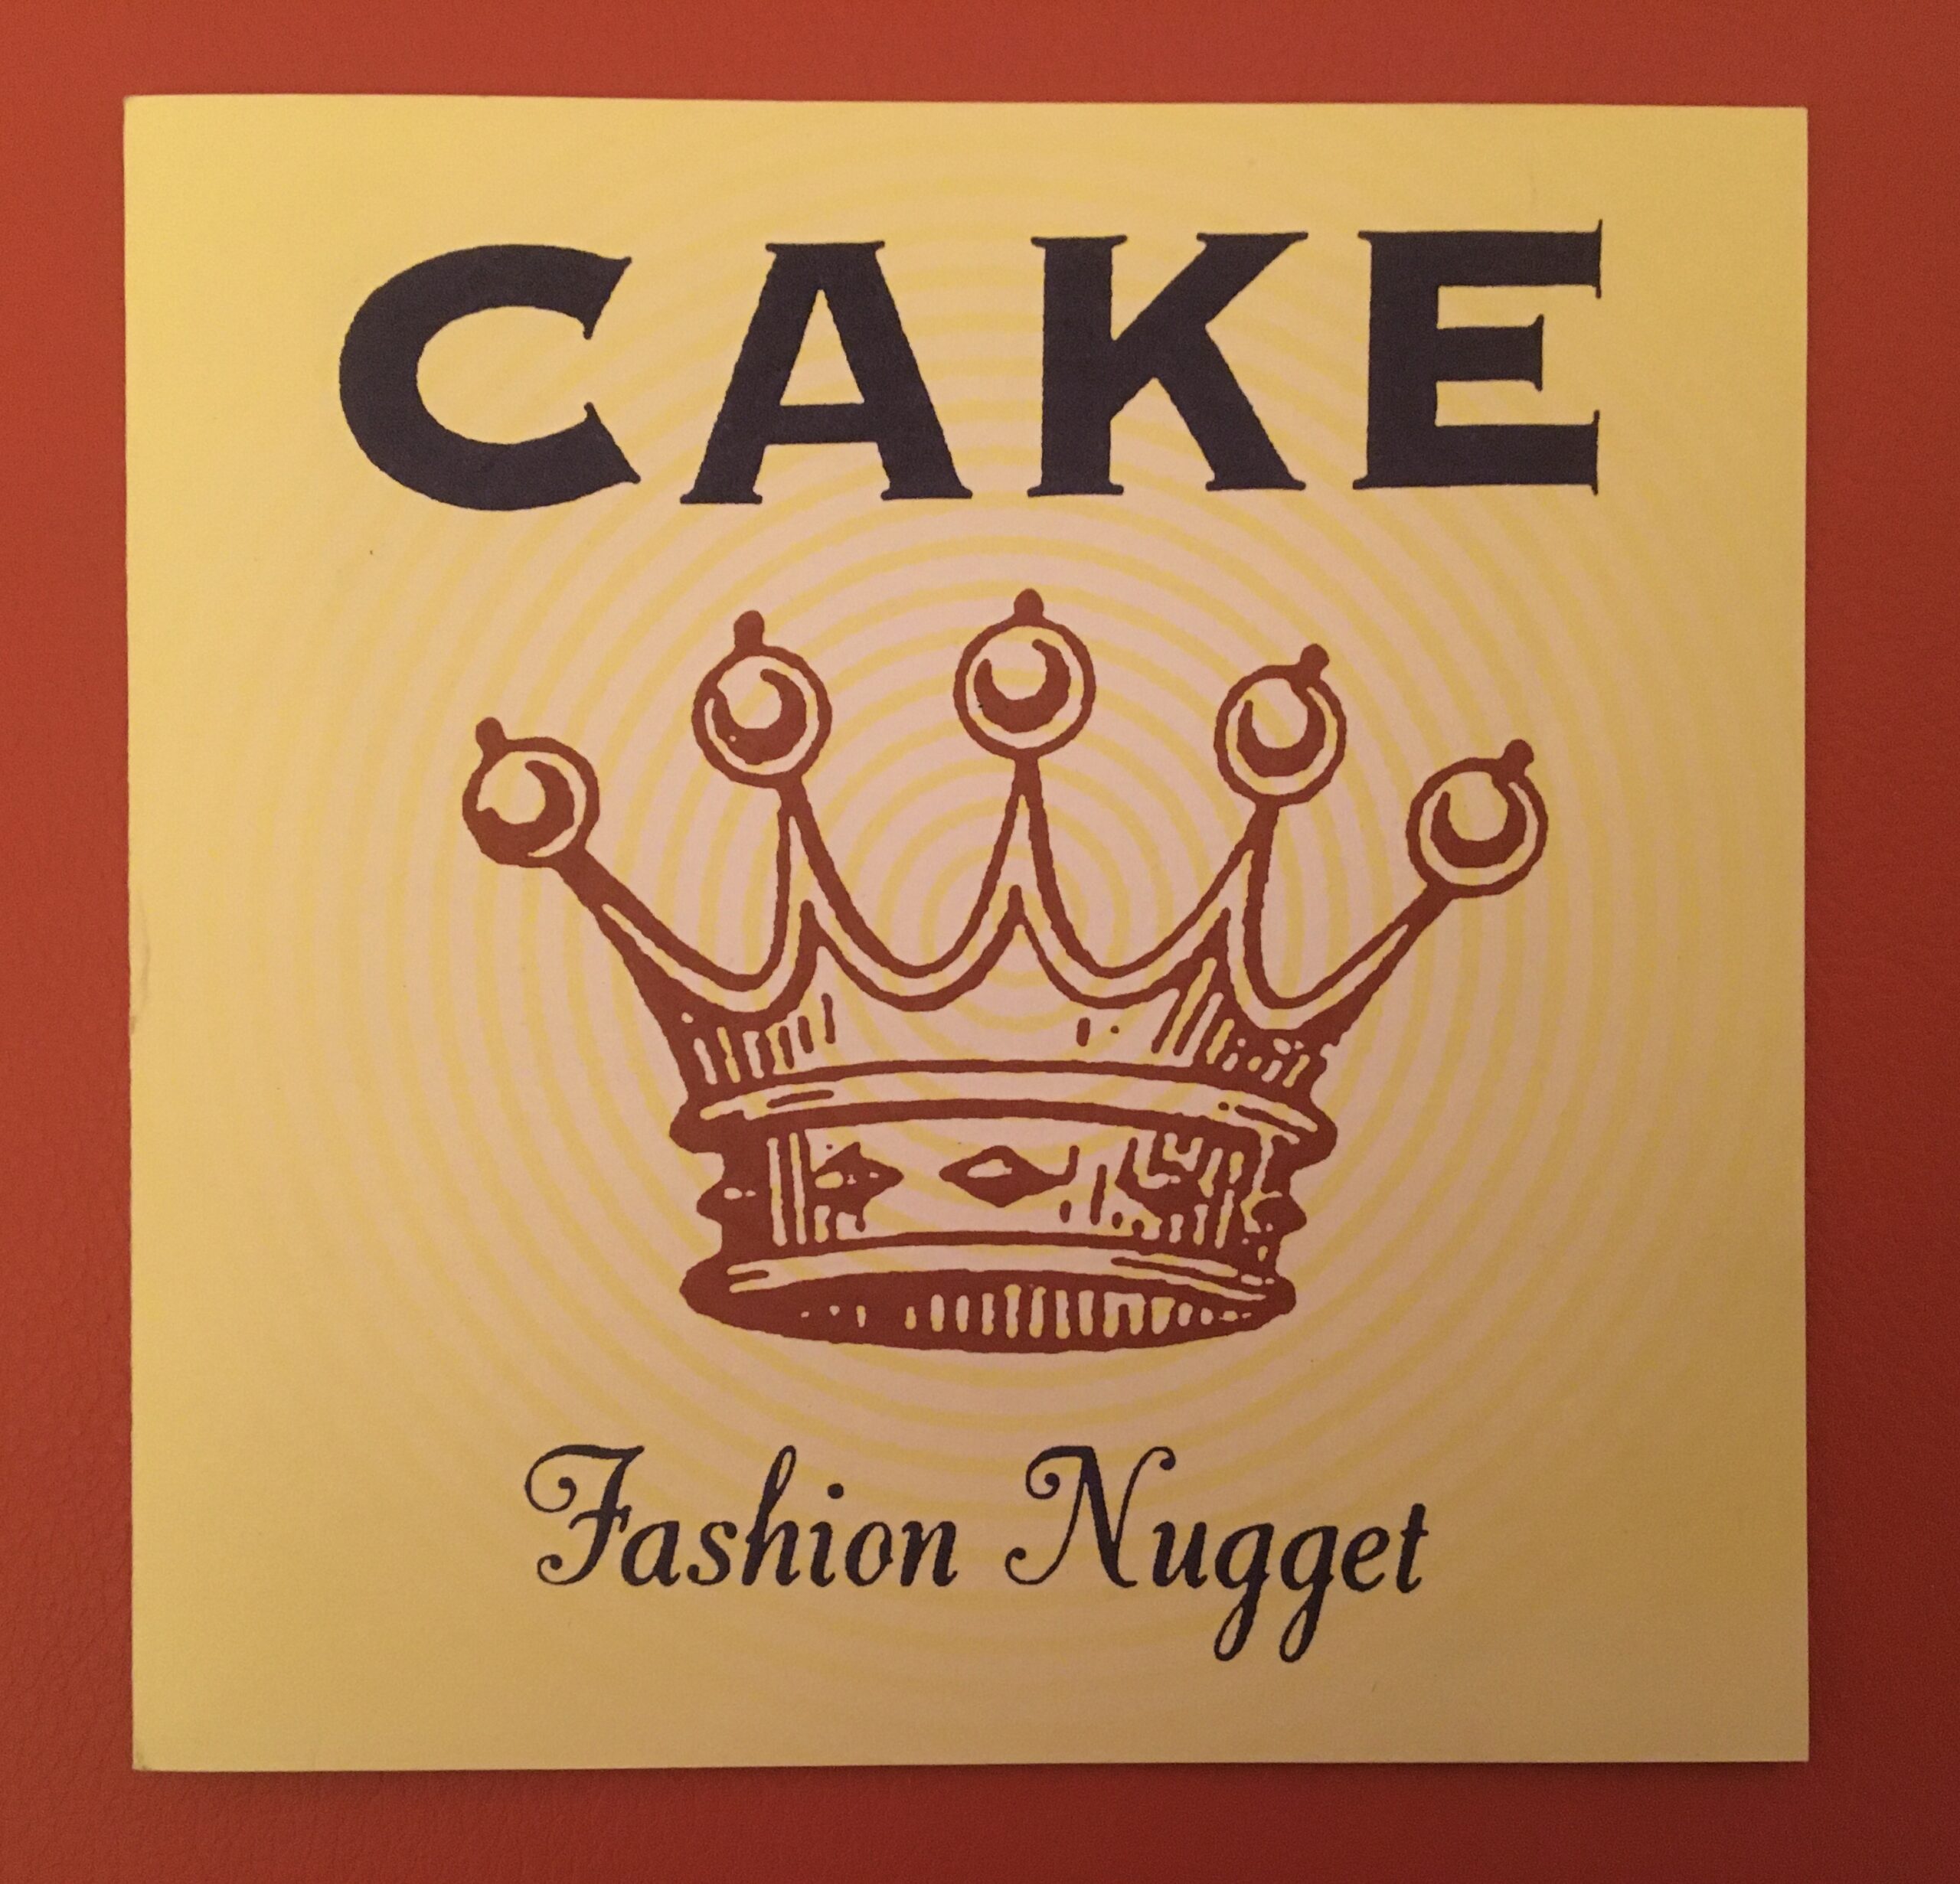 Cake “Fashion Nugget” 케익 ケーキ：久々に新鮮だったアルバム